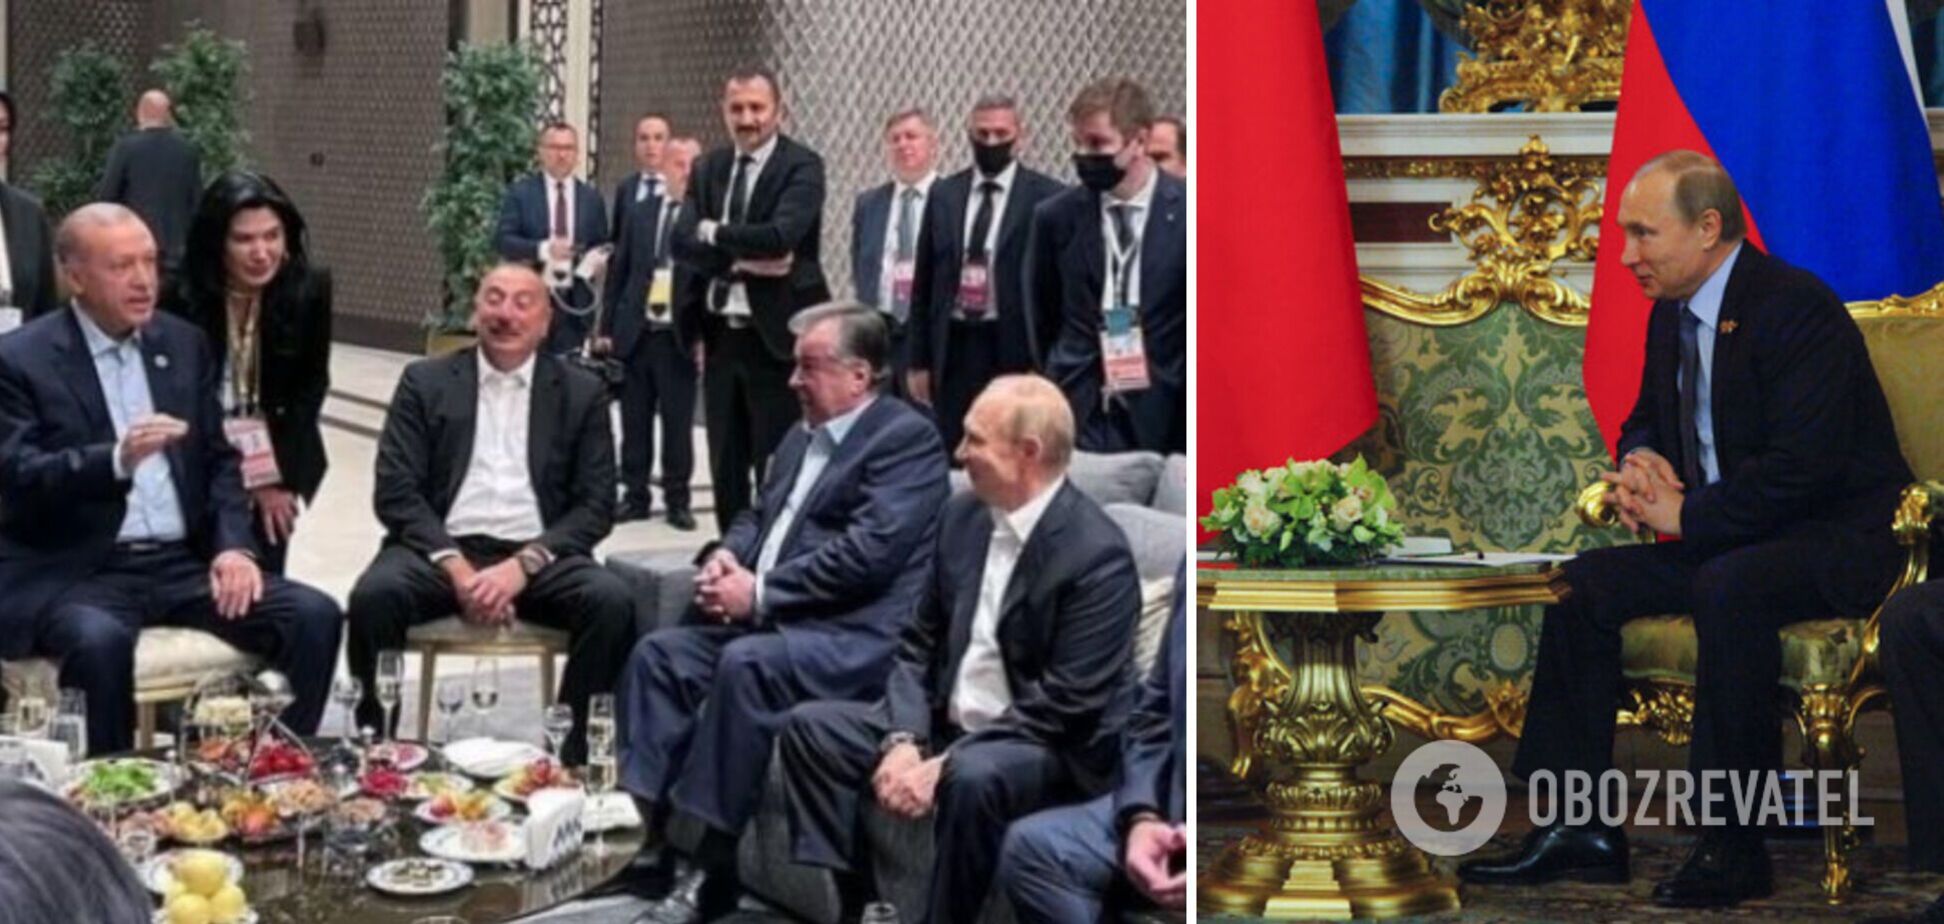 На саммите в Узбекистане 'фишку Путина' обратили против него: Пионтковский объяснил, почему унизили главу Кремля